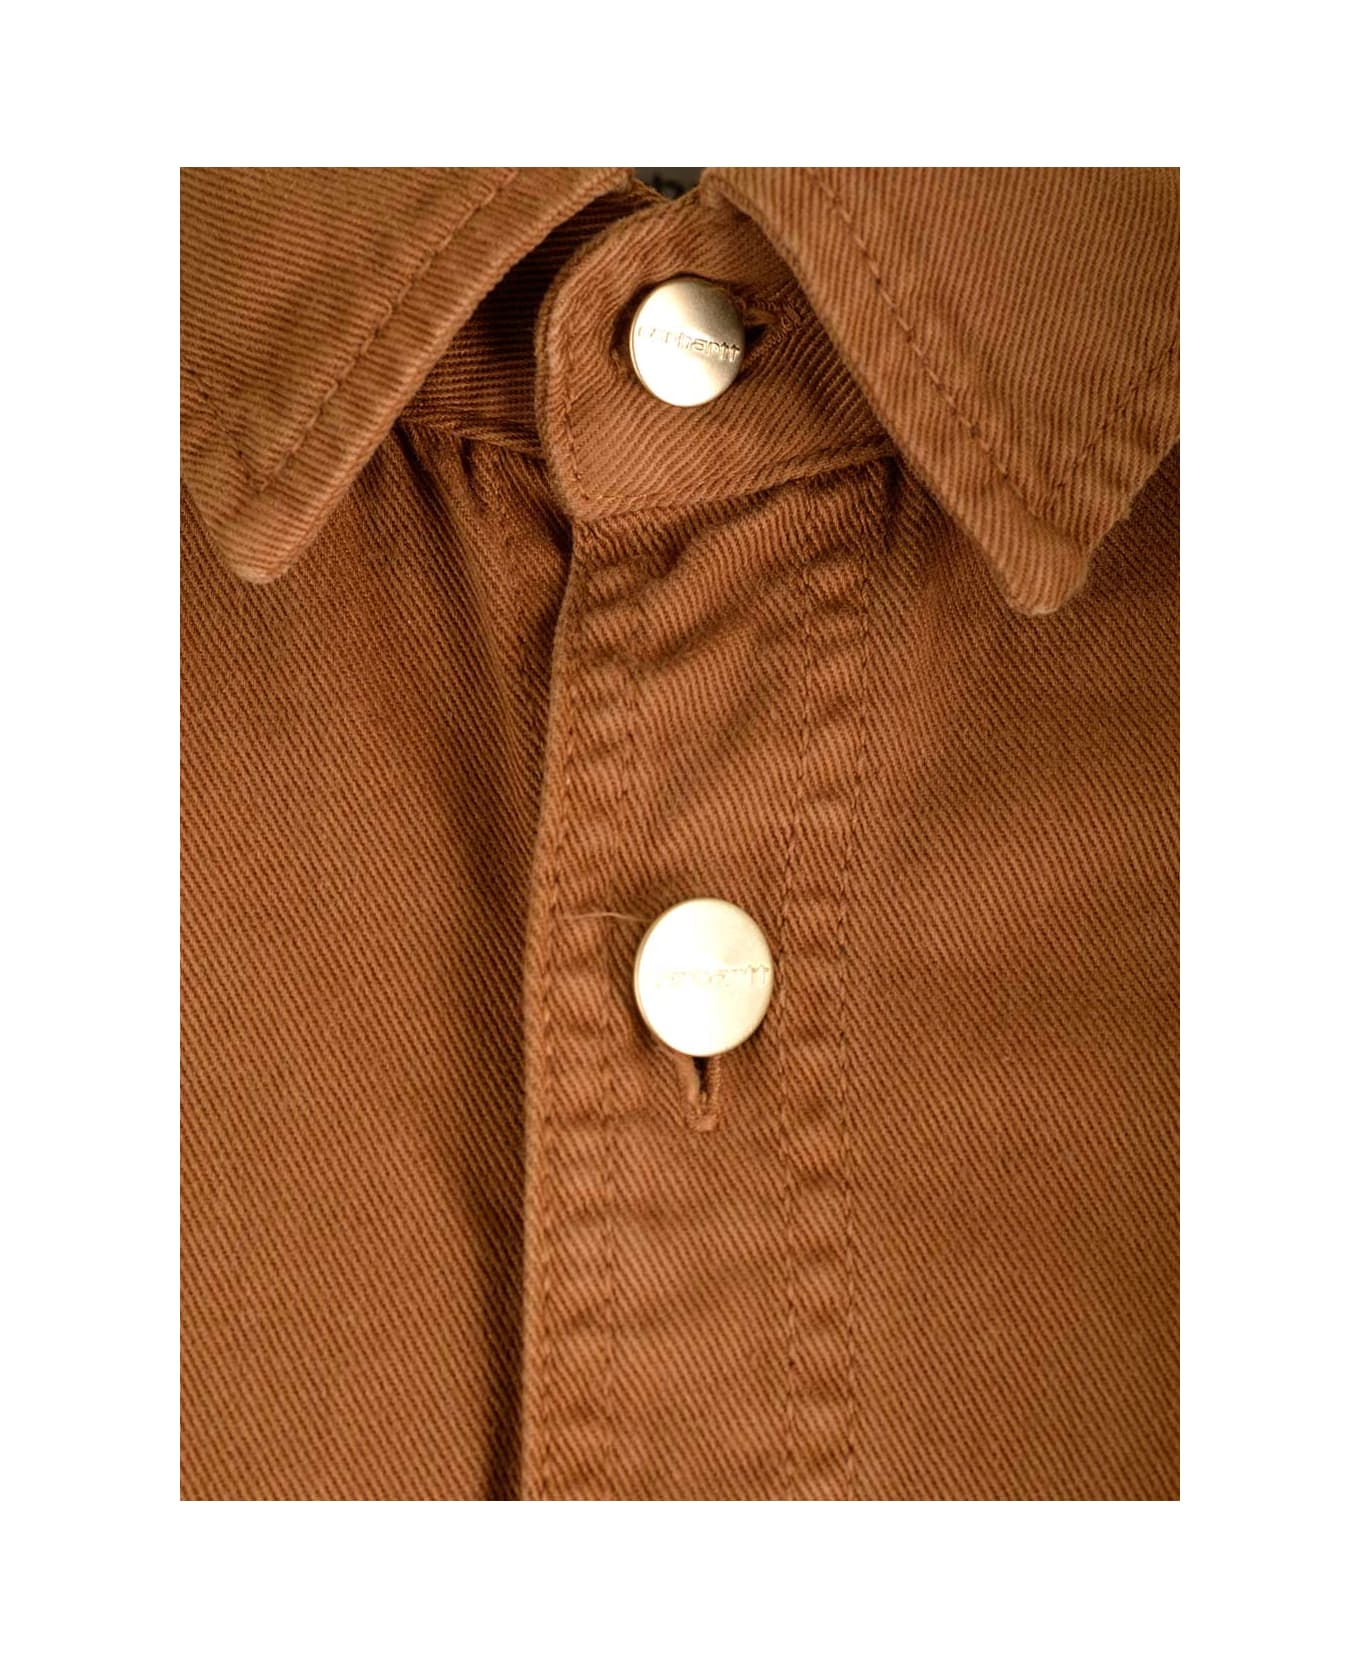 Carhartt Pecan Overshirt - Hzgd Brown Garment